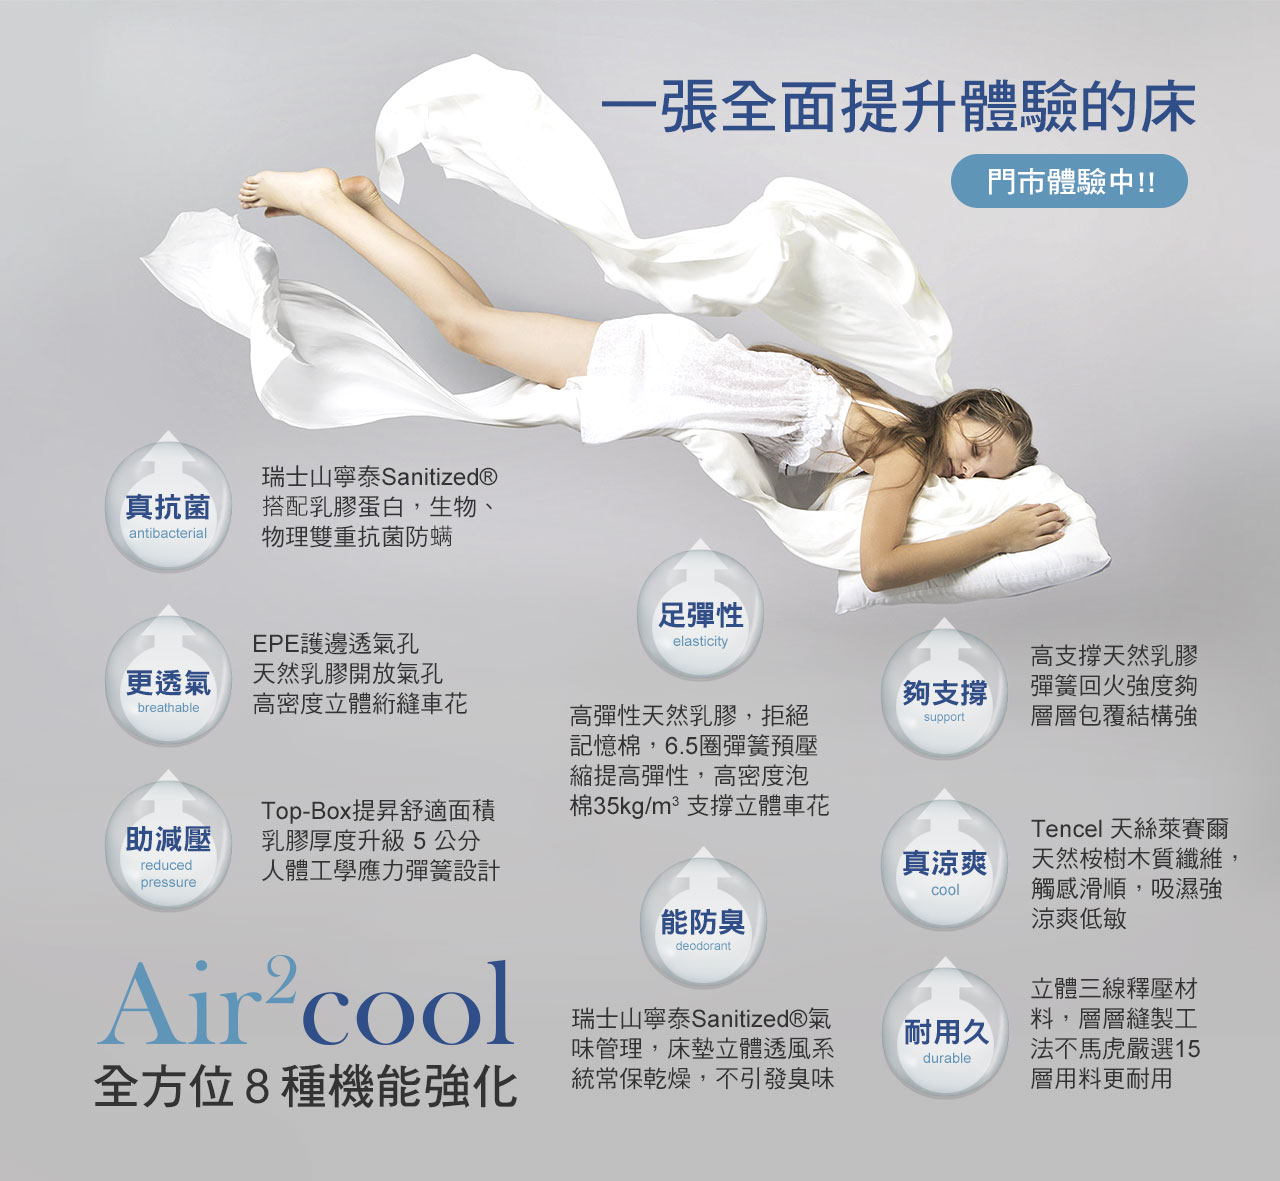 Bennis Air2Cool系列全方位 8 種強化床墊，一張全面提升體驗的床，門市開放體驗中!!